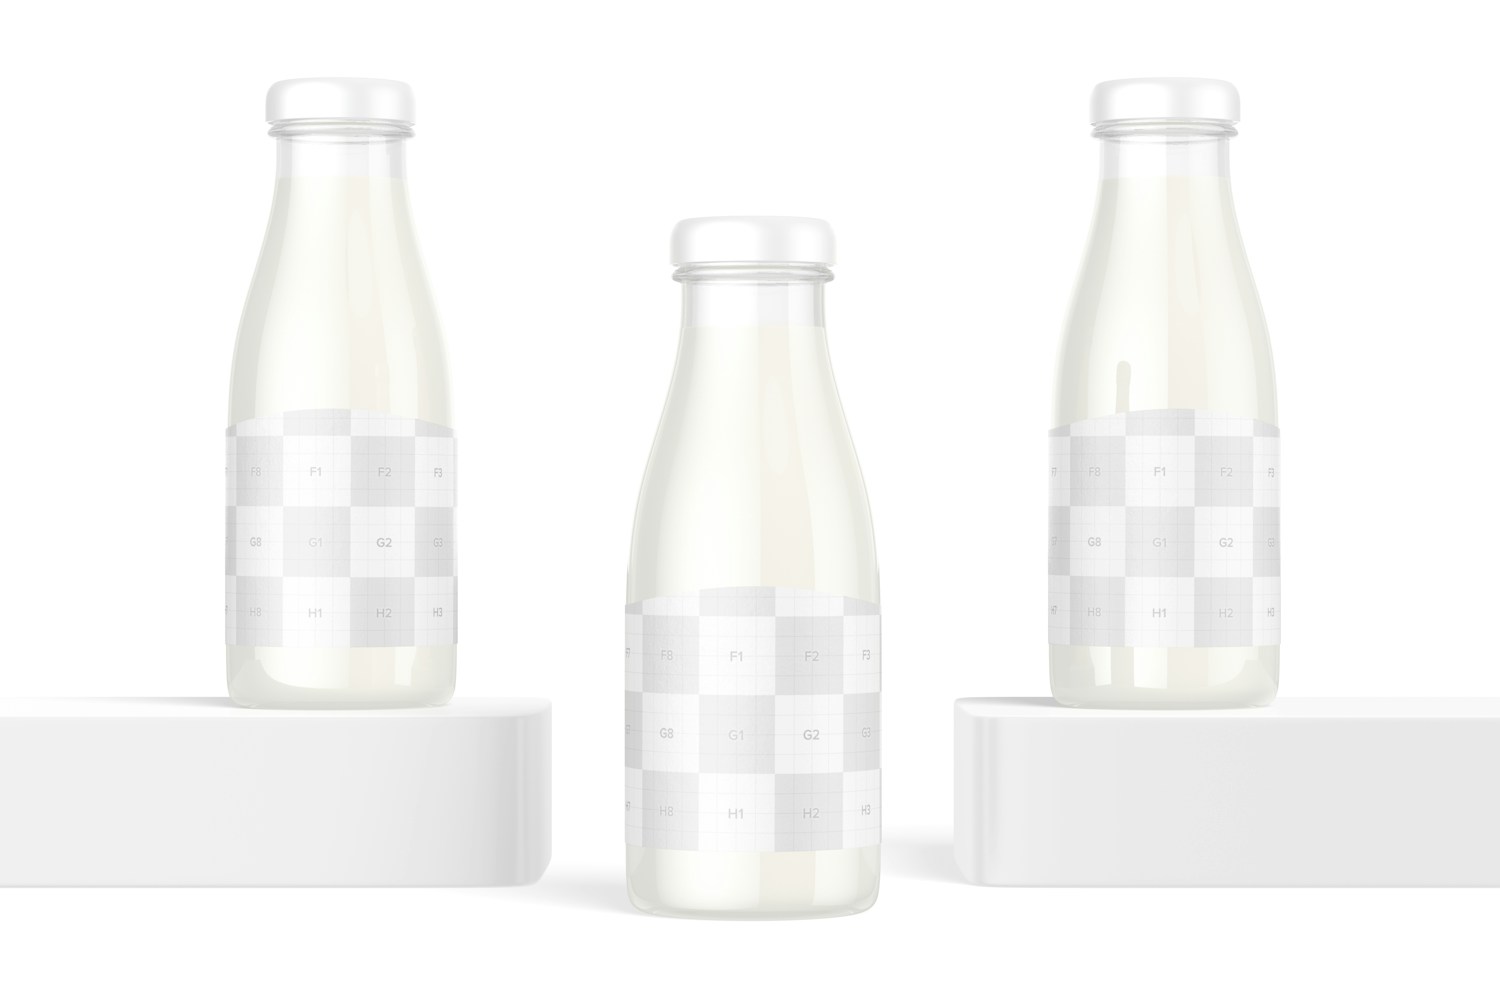 11 oz Glass Milk Bottles Set Mockup